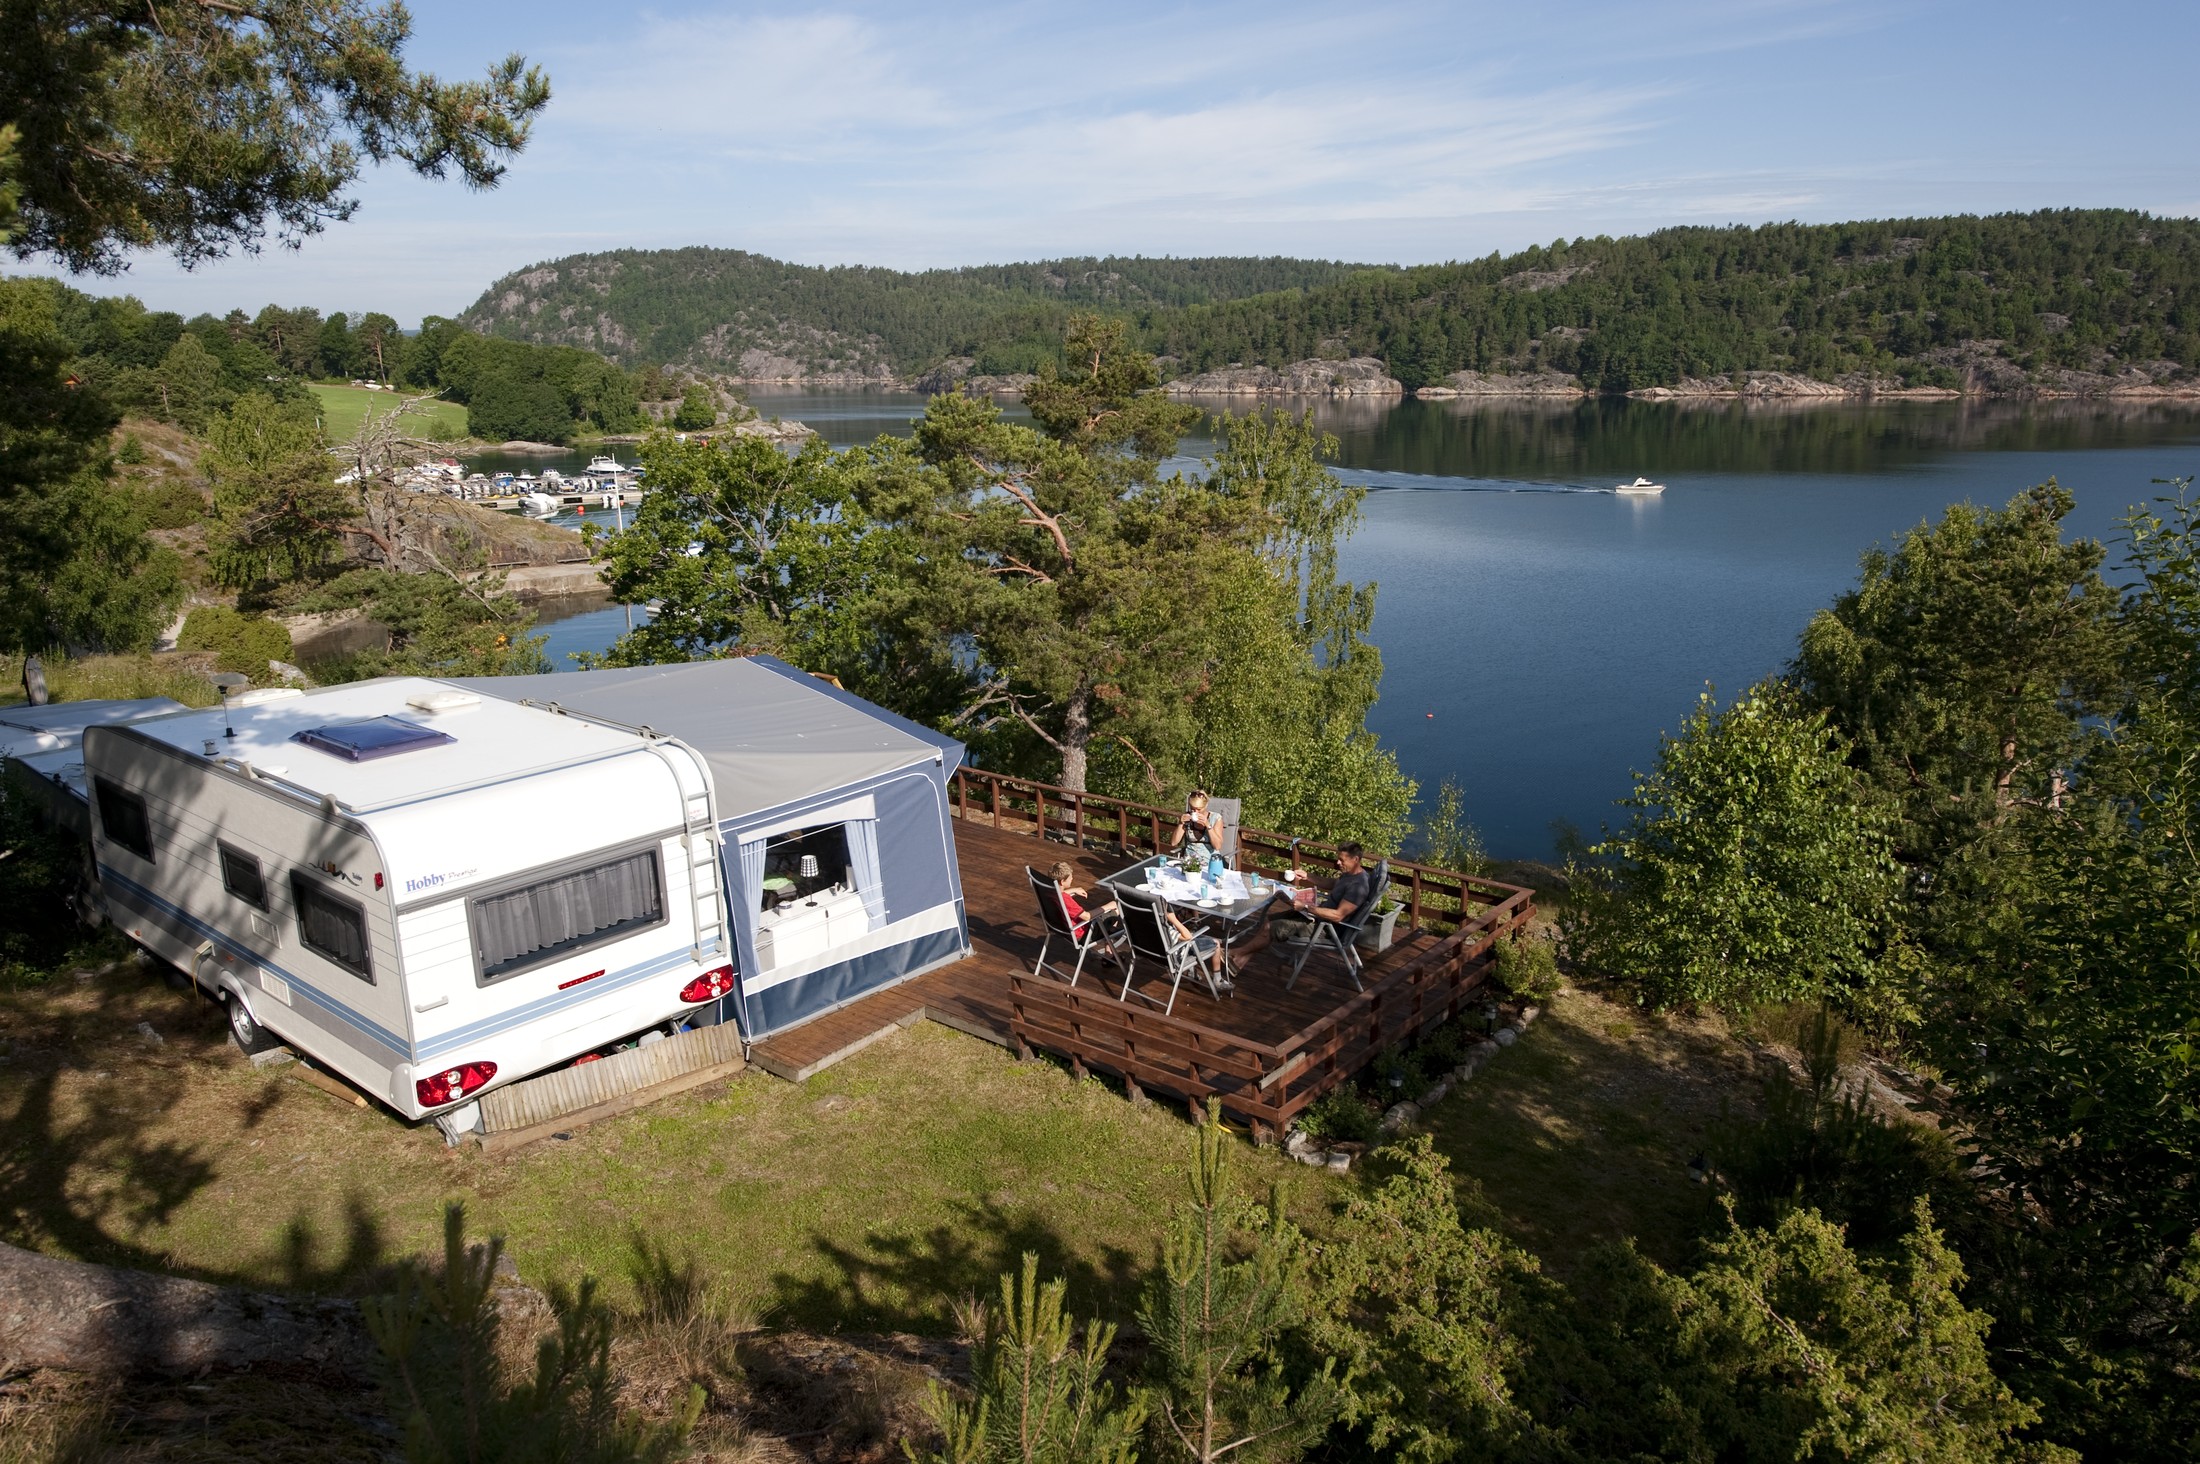 Campings in Noorwegen liggen vaak op schitterende plekken - Photocredit: Terje Rakke / Nordic Life AS - Visitnorway.com